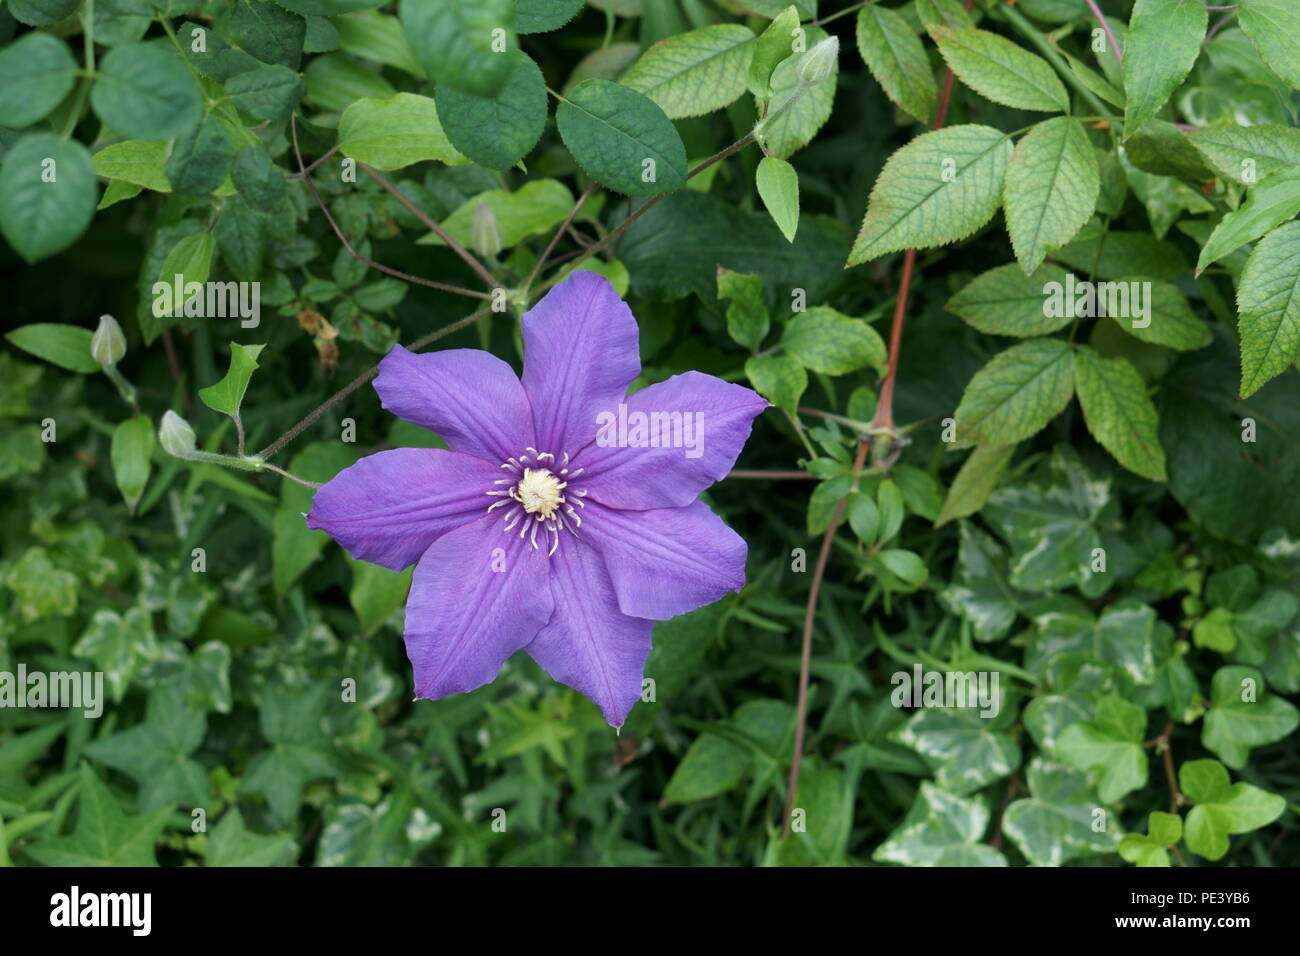 Purple flower blooming alone in a garden Stock Photo